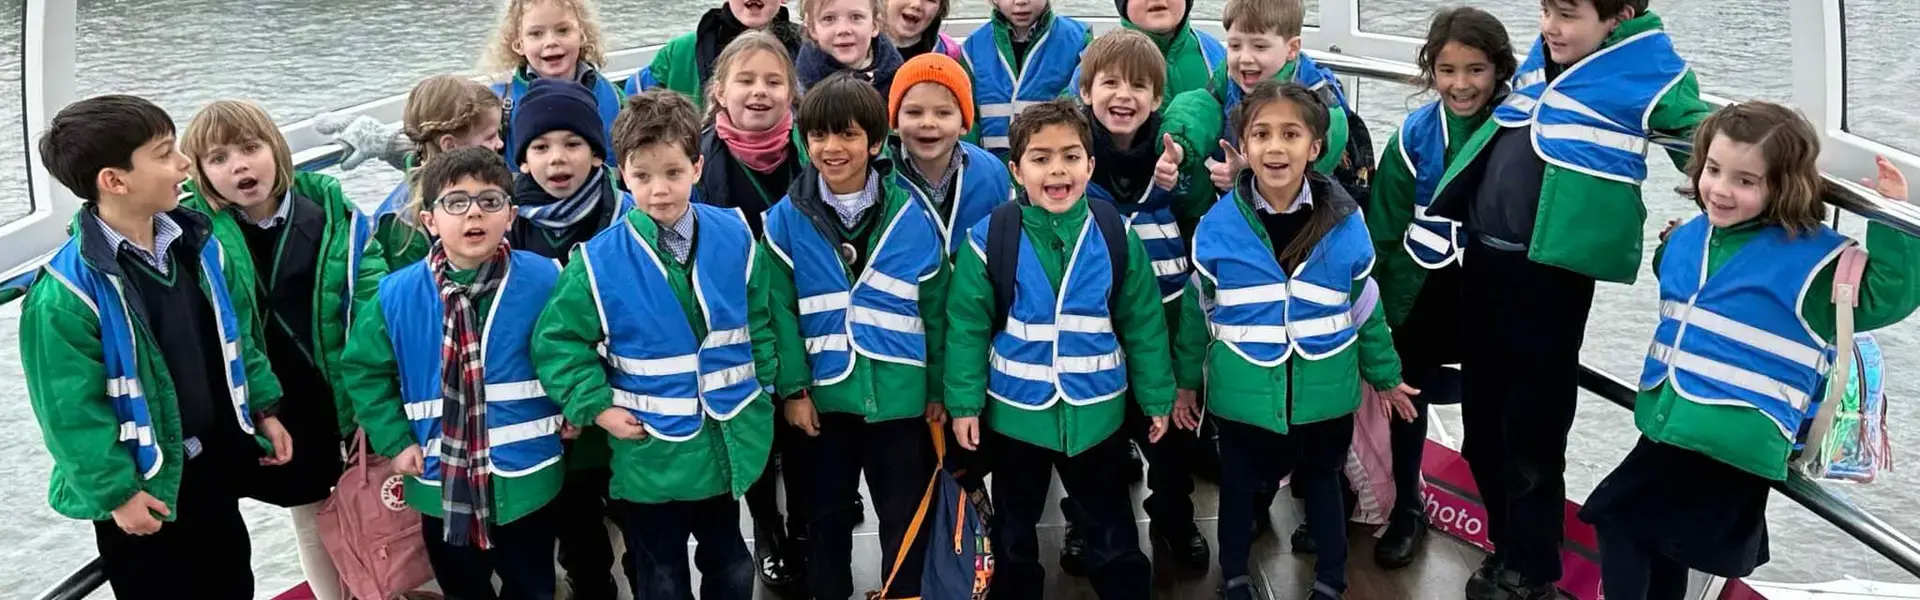 Prep 1 pupils visit to the London Eye.